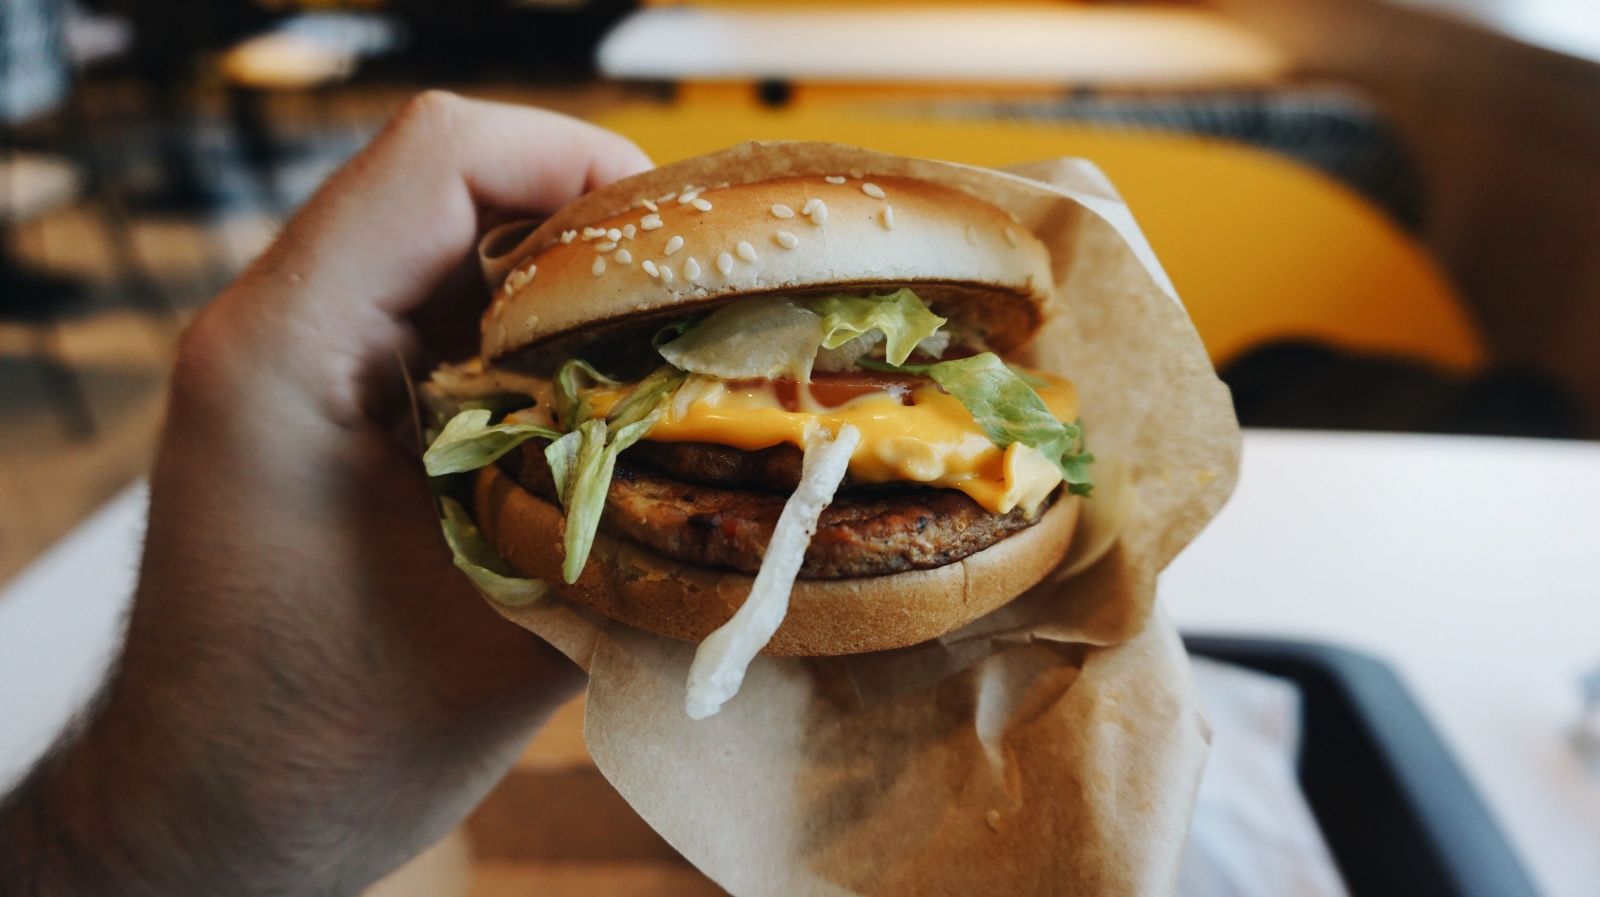 Lučina x McDonald's: Ako chutí tradičný slovenský burger s bryndzou a reďkovkou v mekáči? (Test)